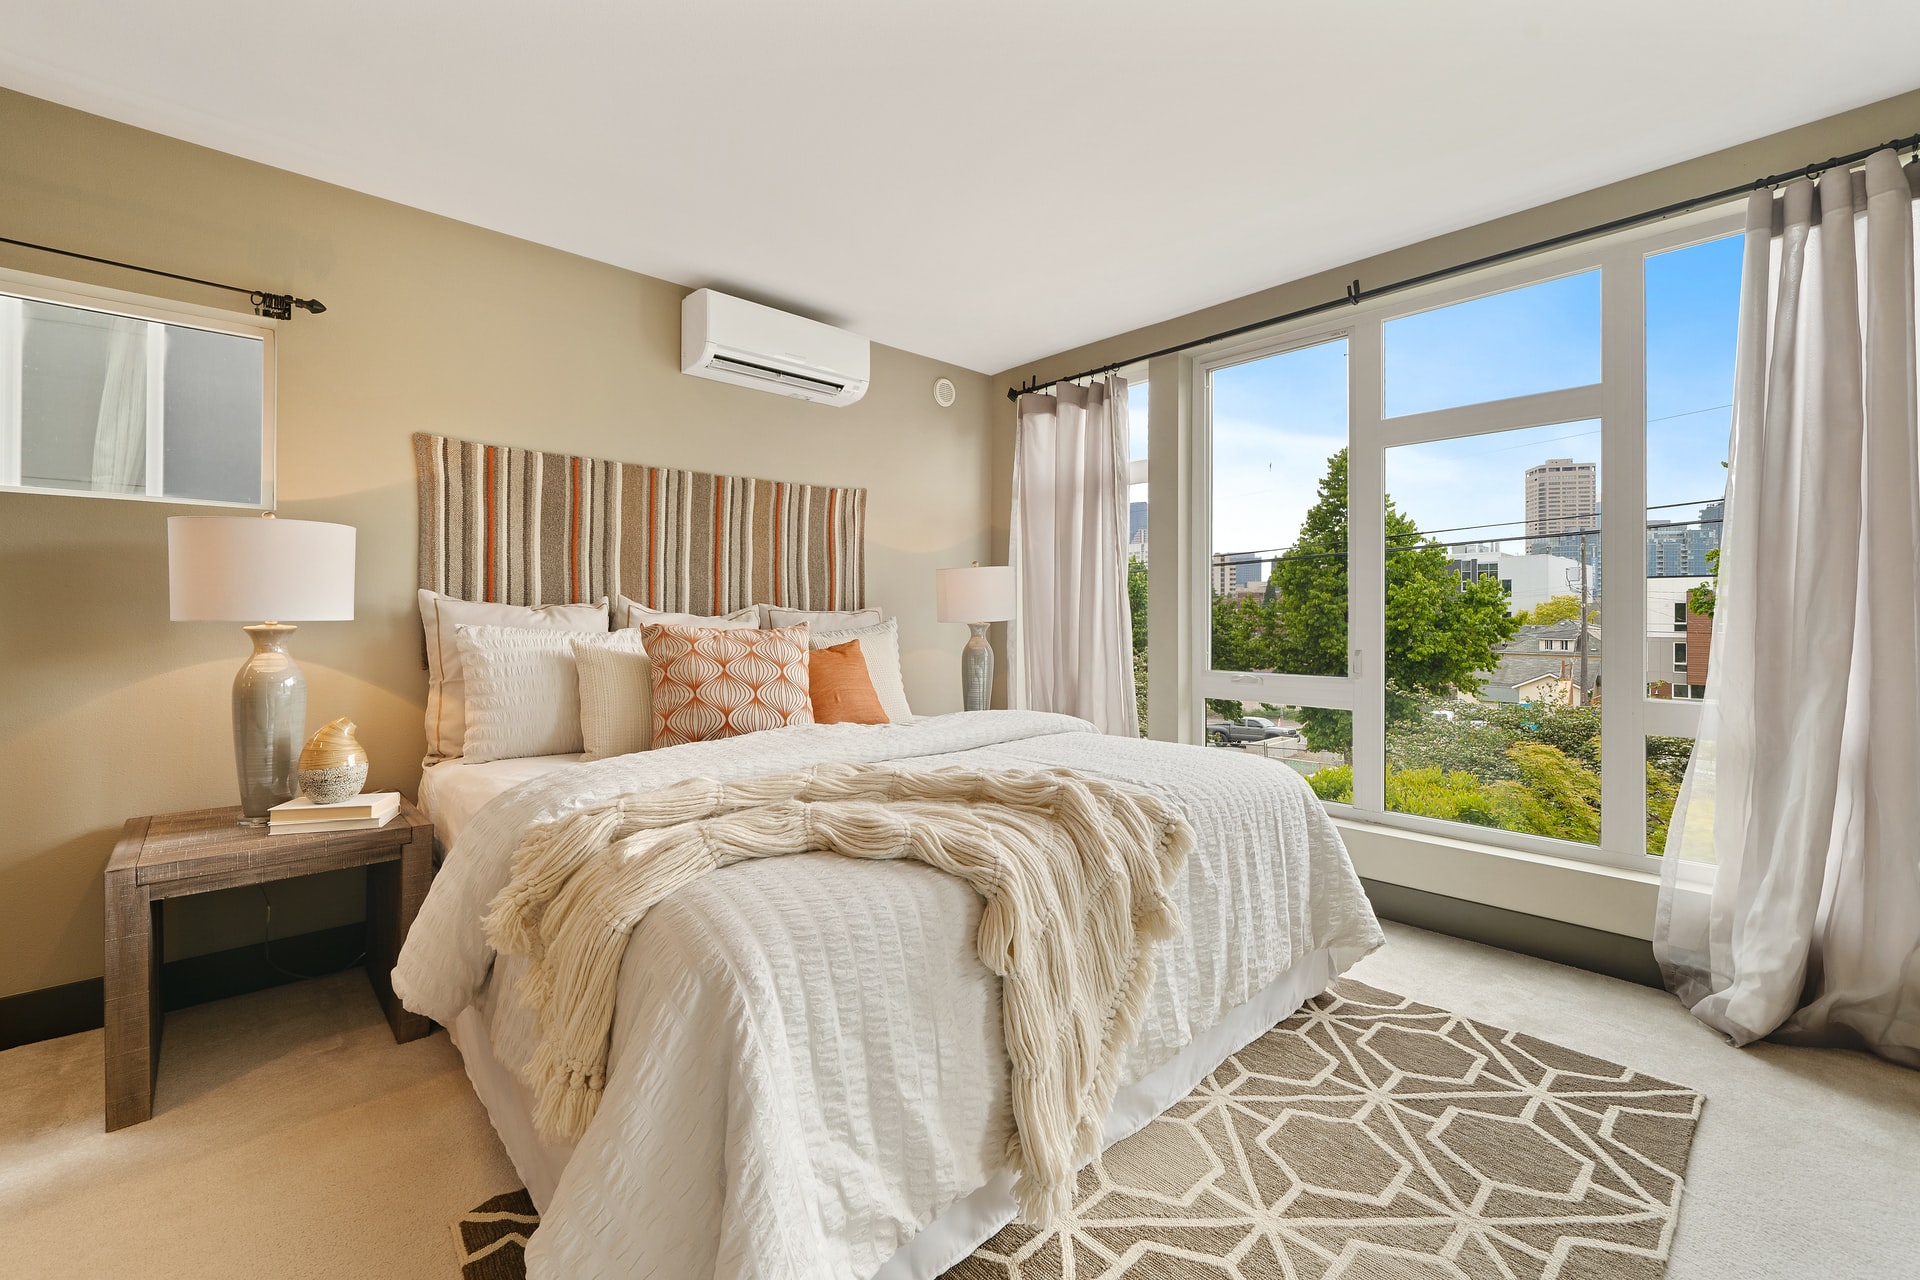 Bedroom arrangement – how to create a cozy decor?